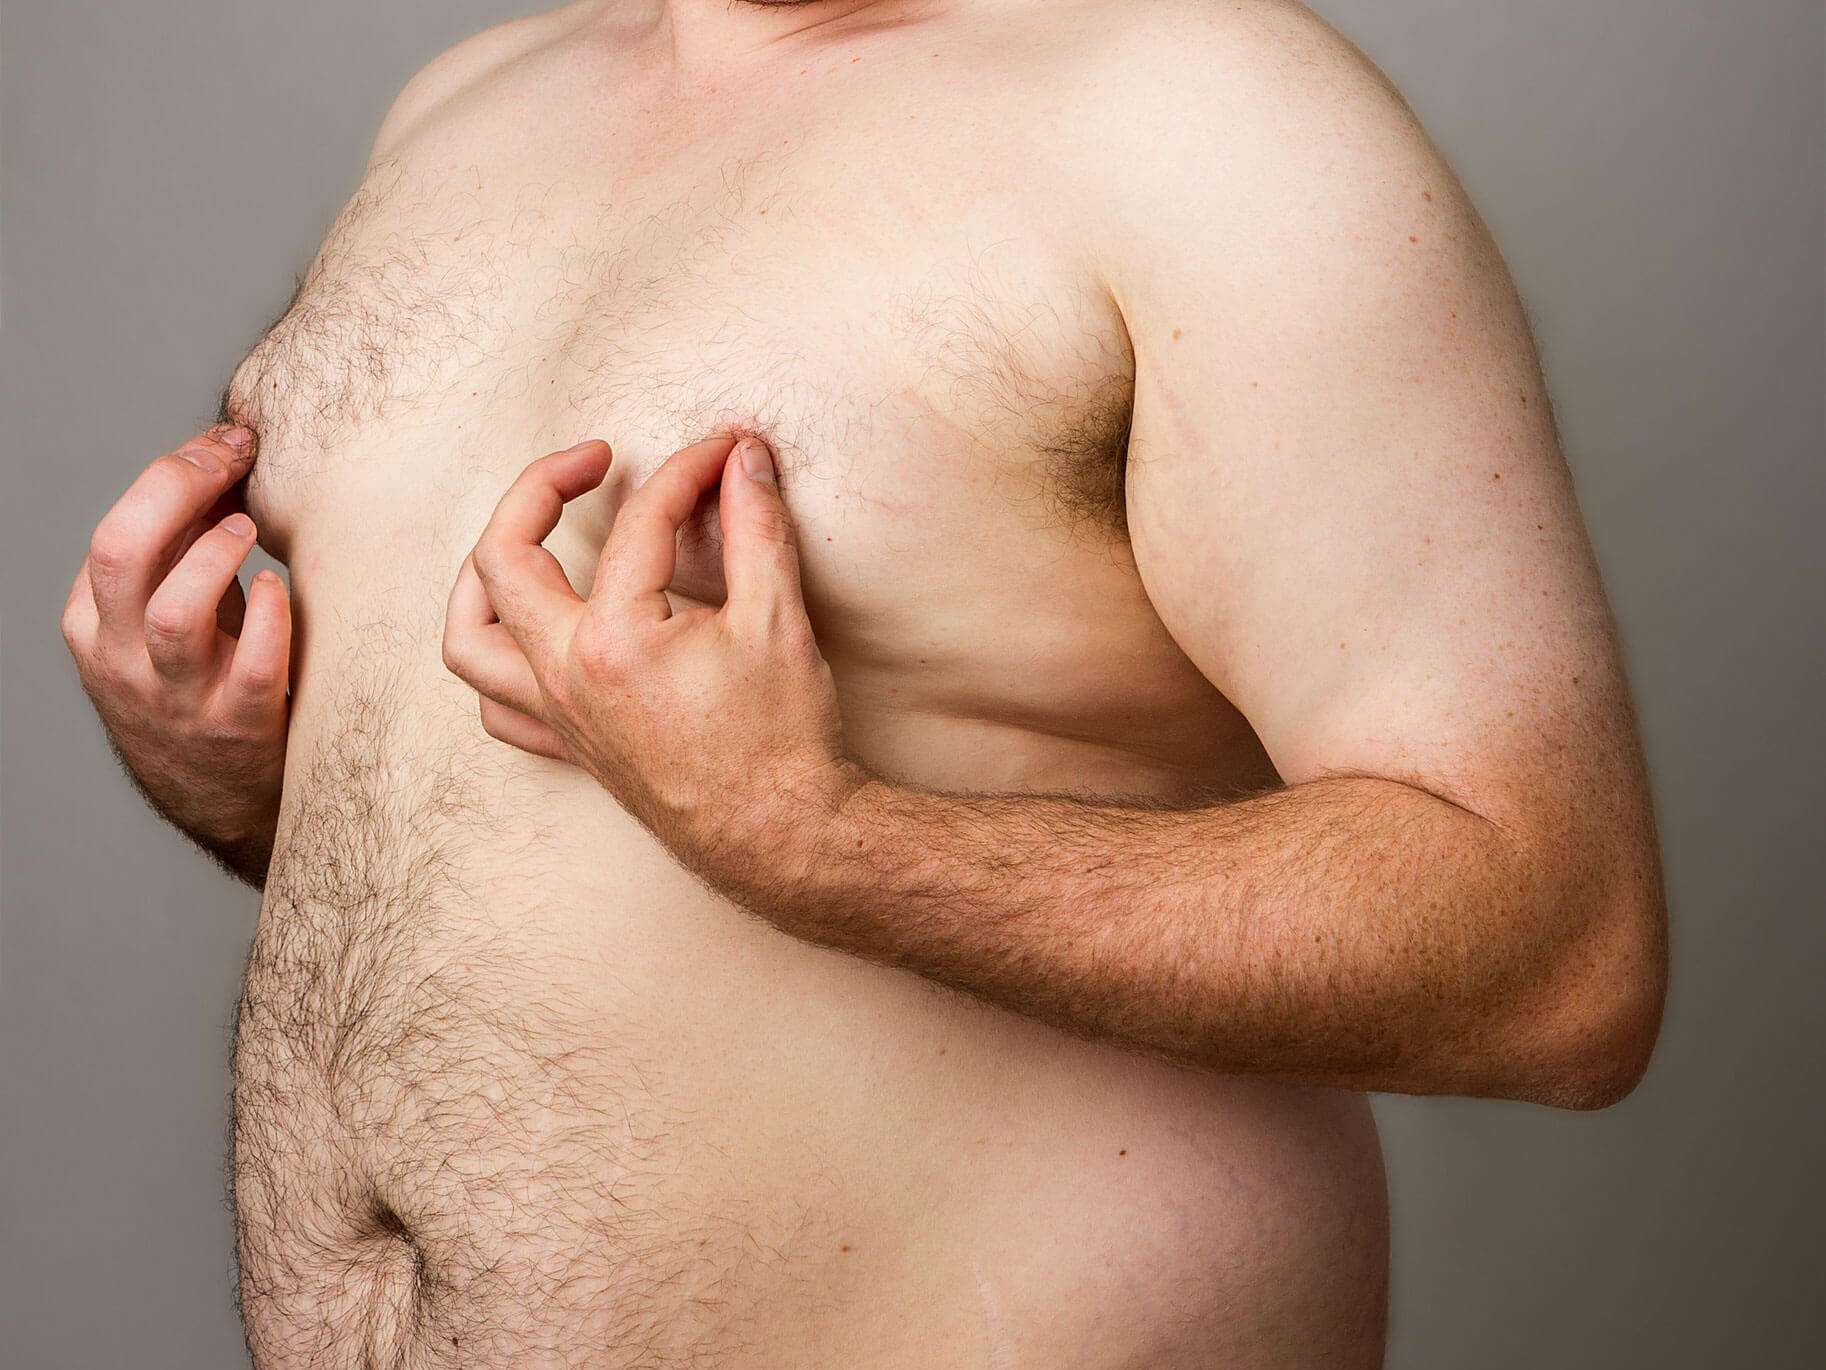 стимуляция груди у мужчин фото 8